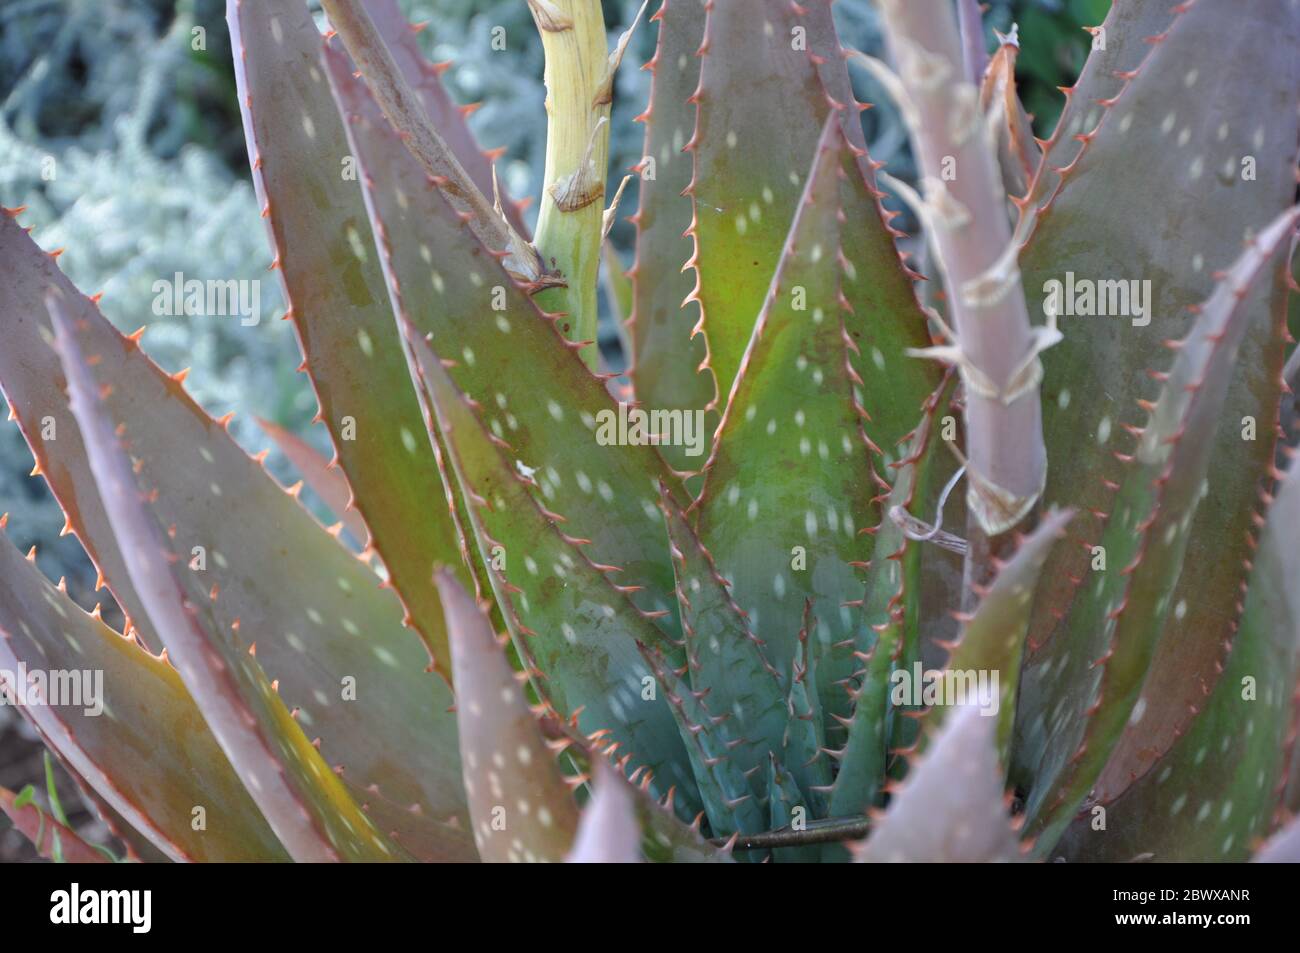 Aloe Succulent Plant Aloe vera (aloe arborescens Miller Fotografía de stock  - Alamy